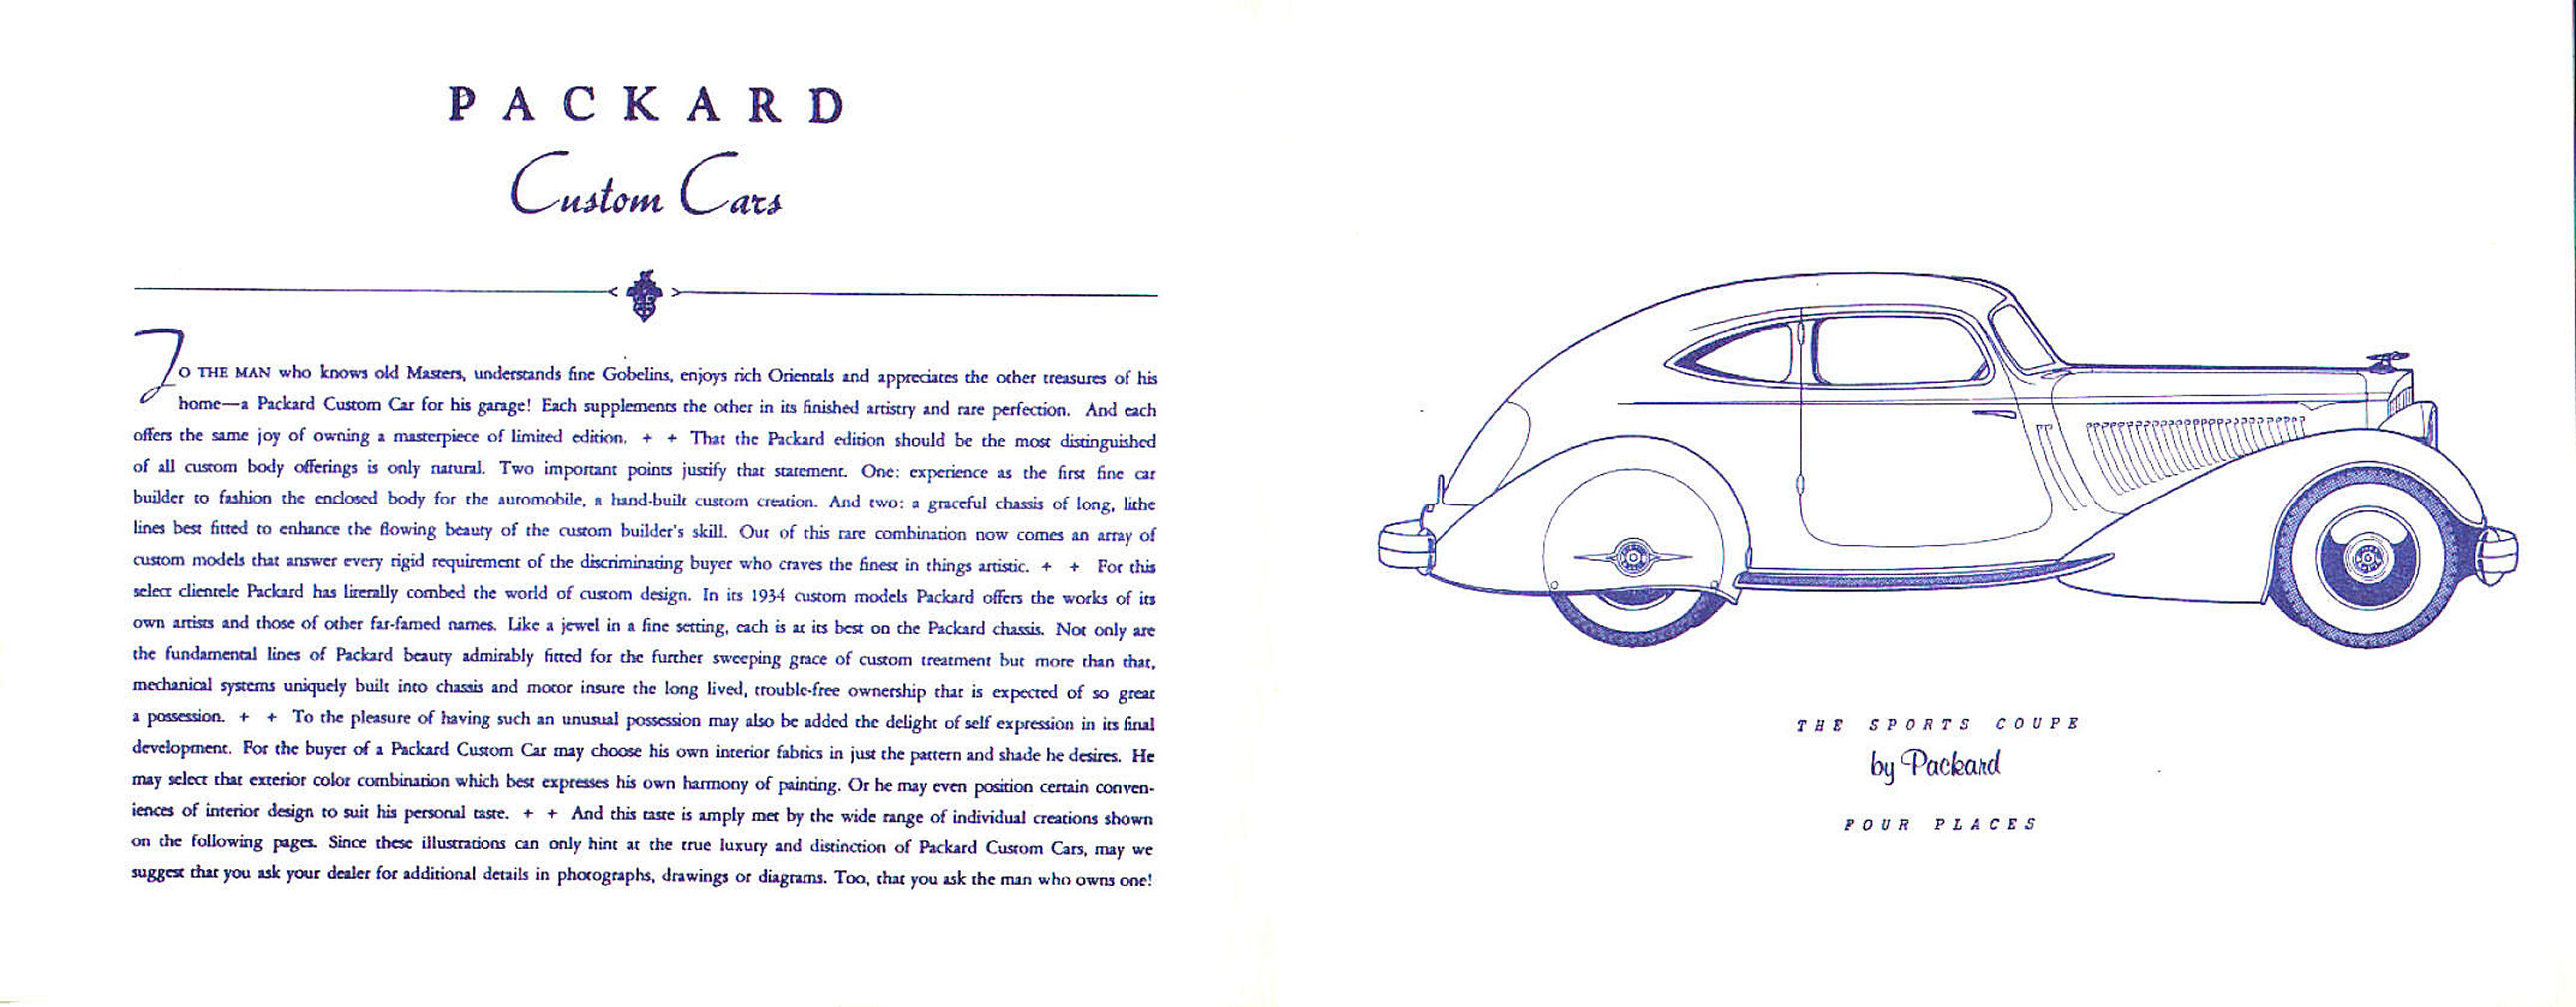 1934_Packard_Custom_Cars_Booklet-02-03